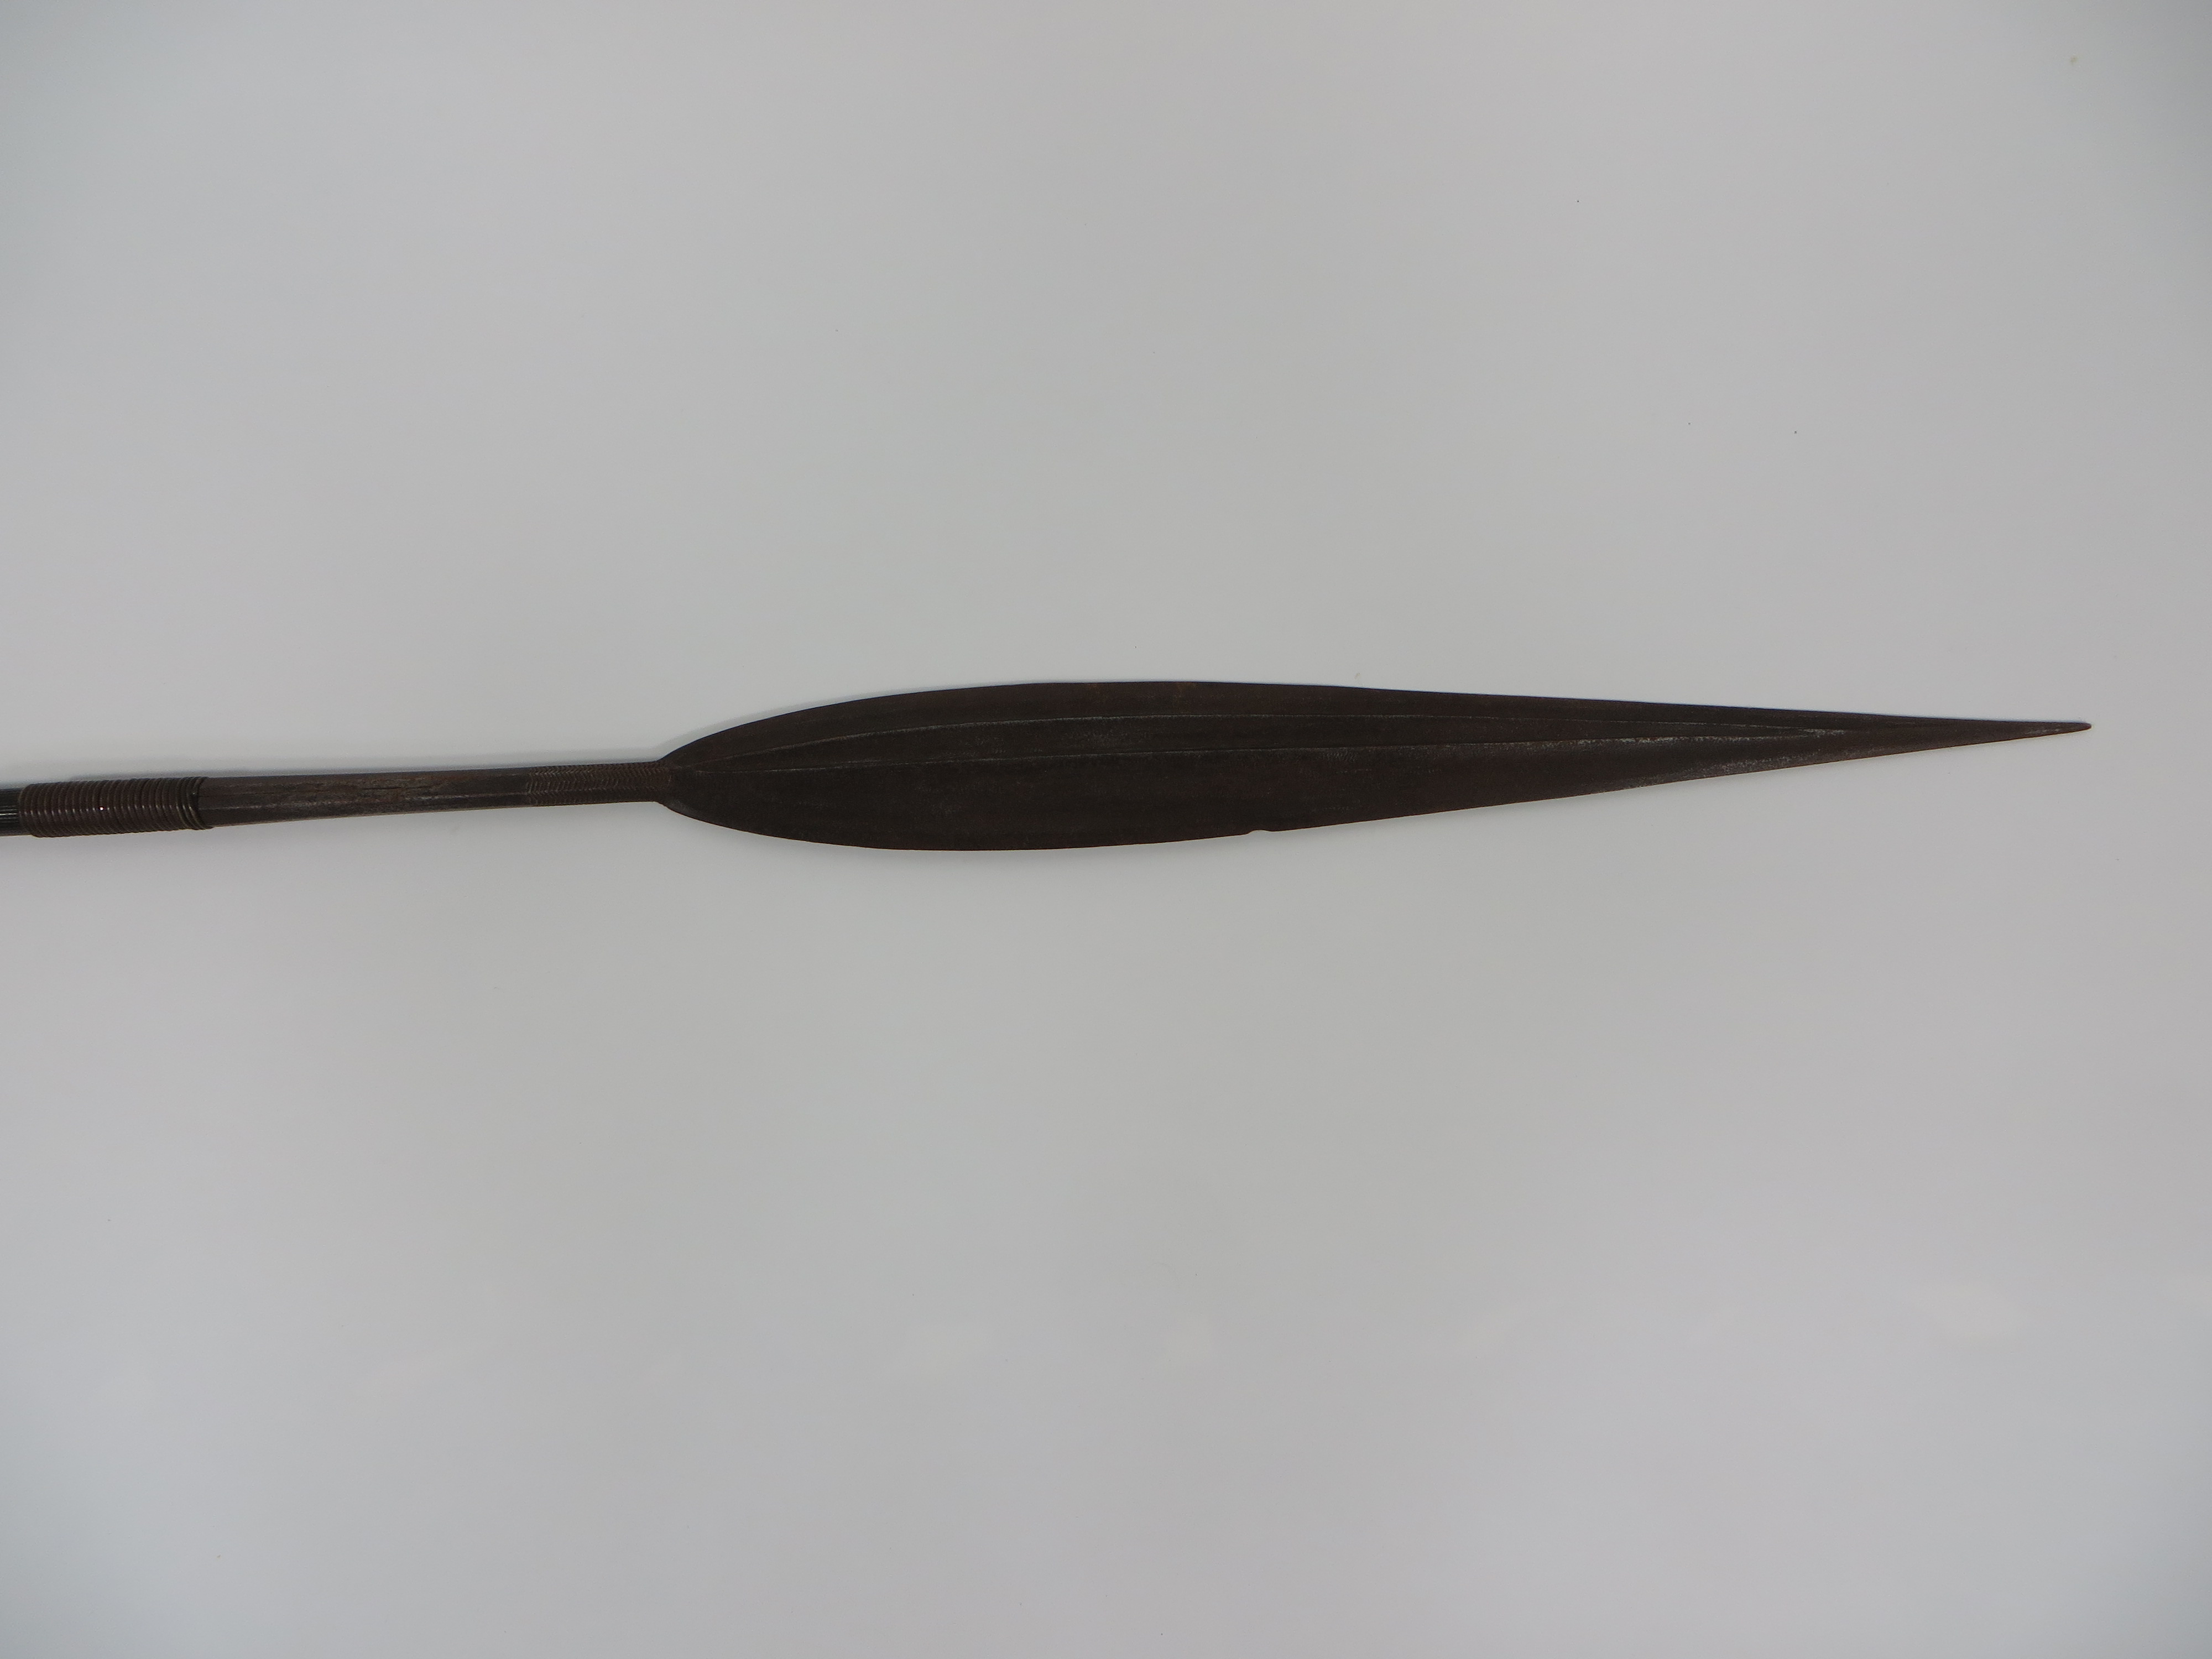 Mid 19th Century Sudanese Spear impressive 24 inch x 3 inch broad leaf shape blade. Offset raised